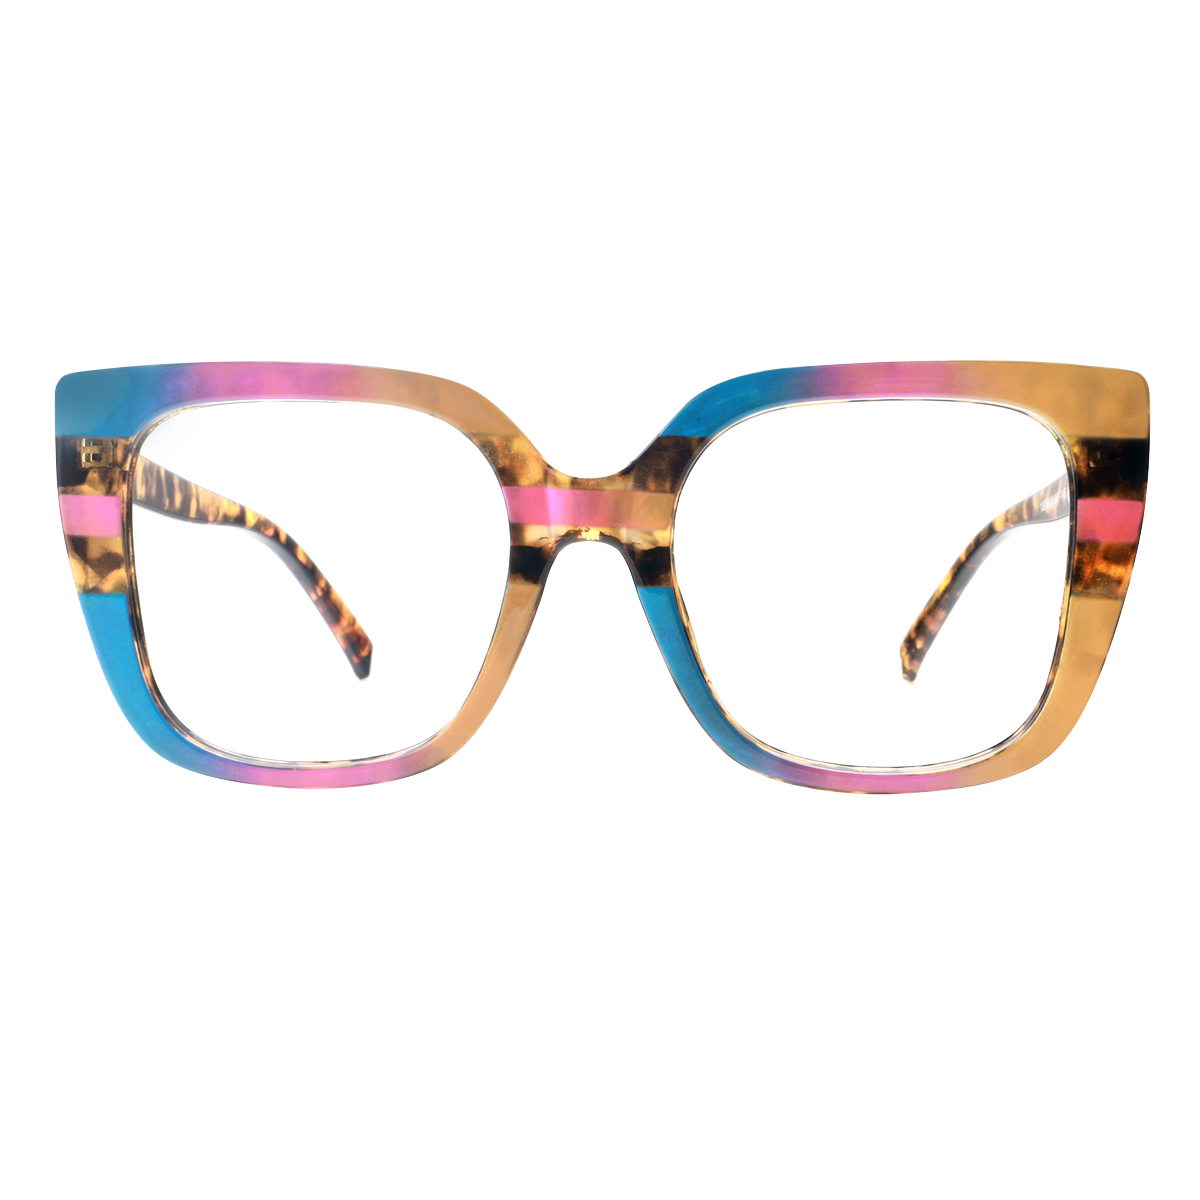 square blue eyeglasses